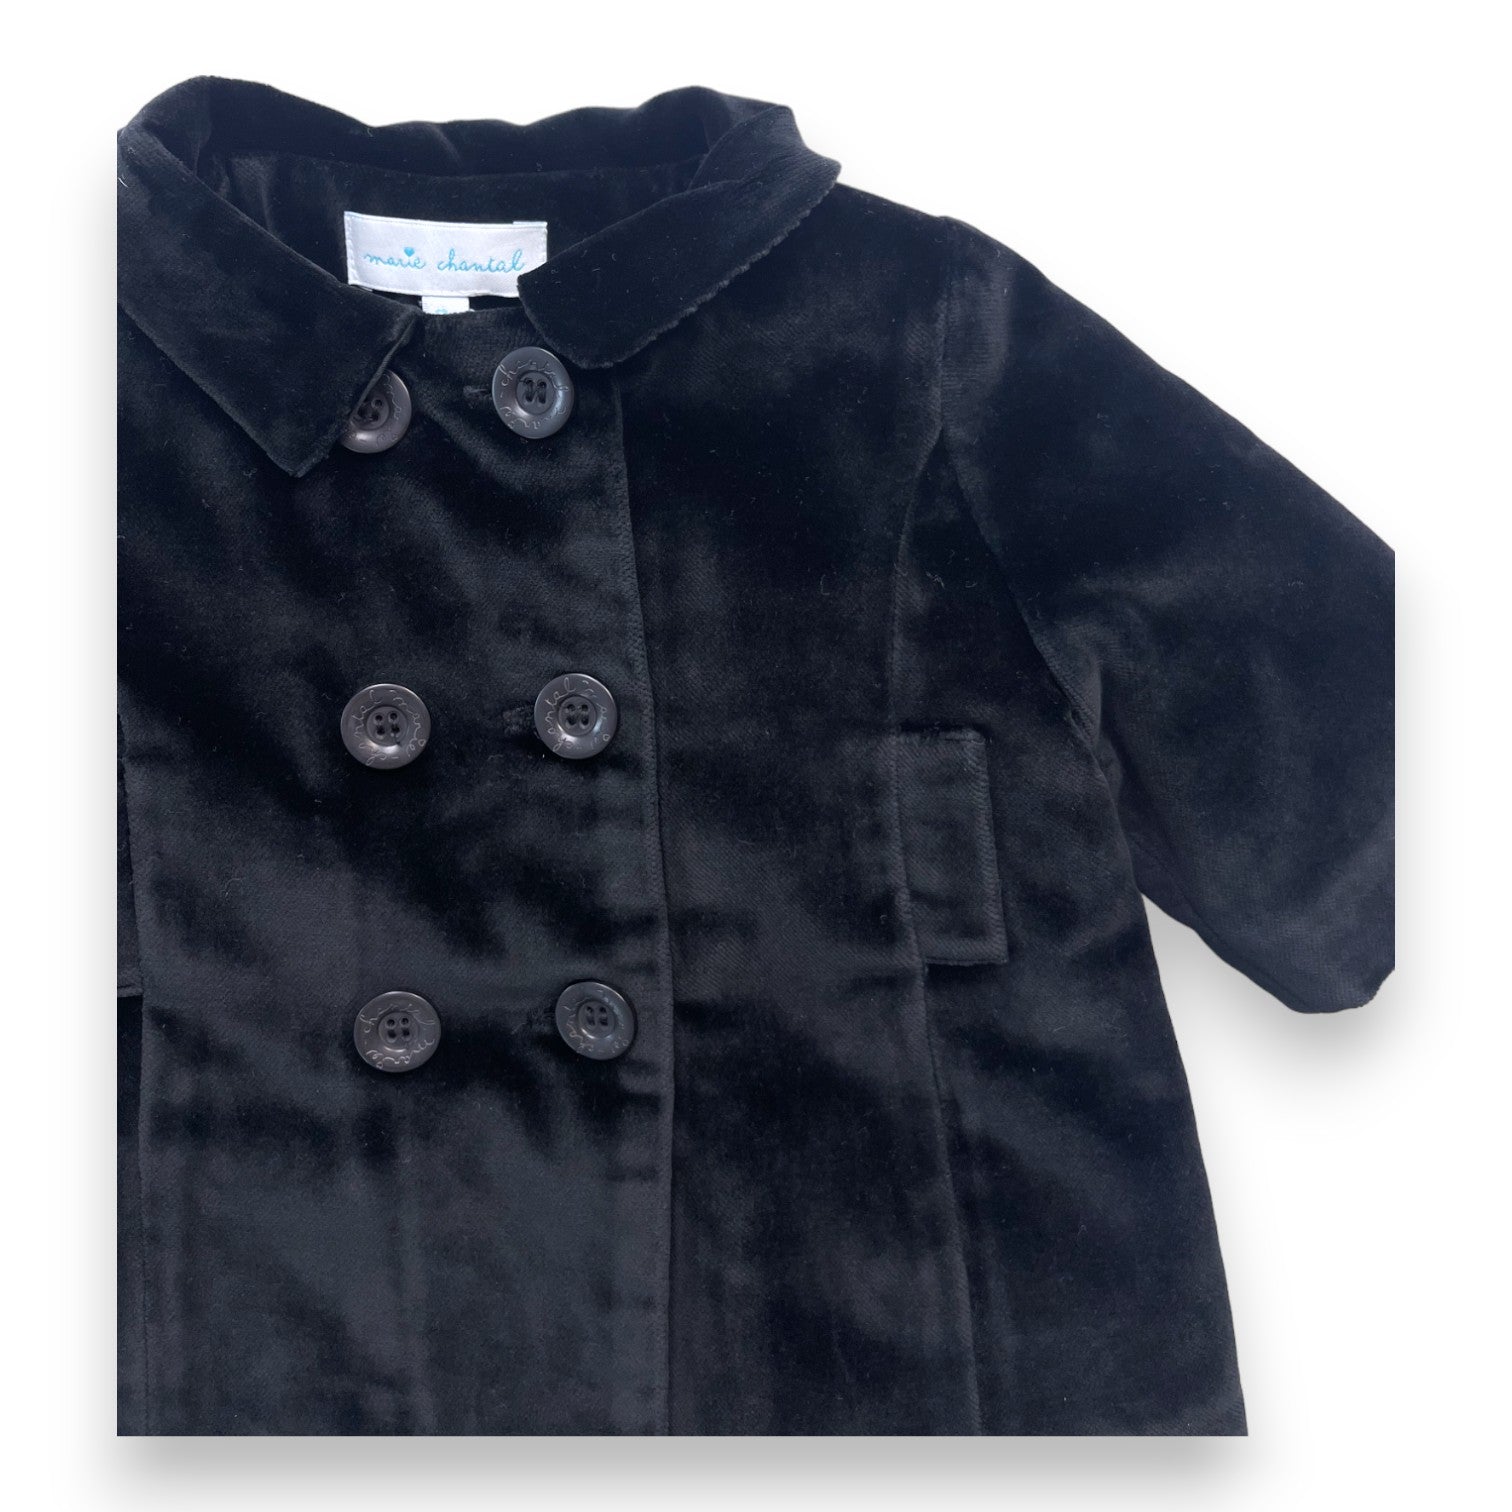 MARIE CHANTAL - Manteau en velours noir (neuf) - 3 mois